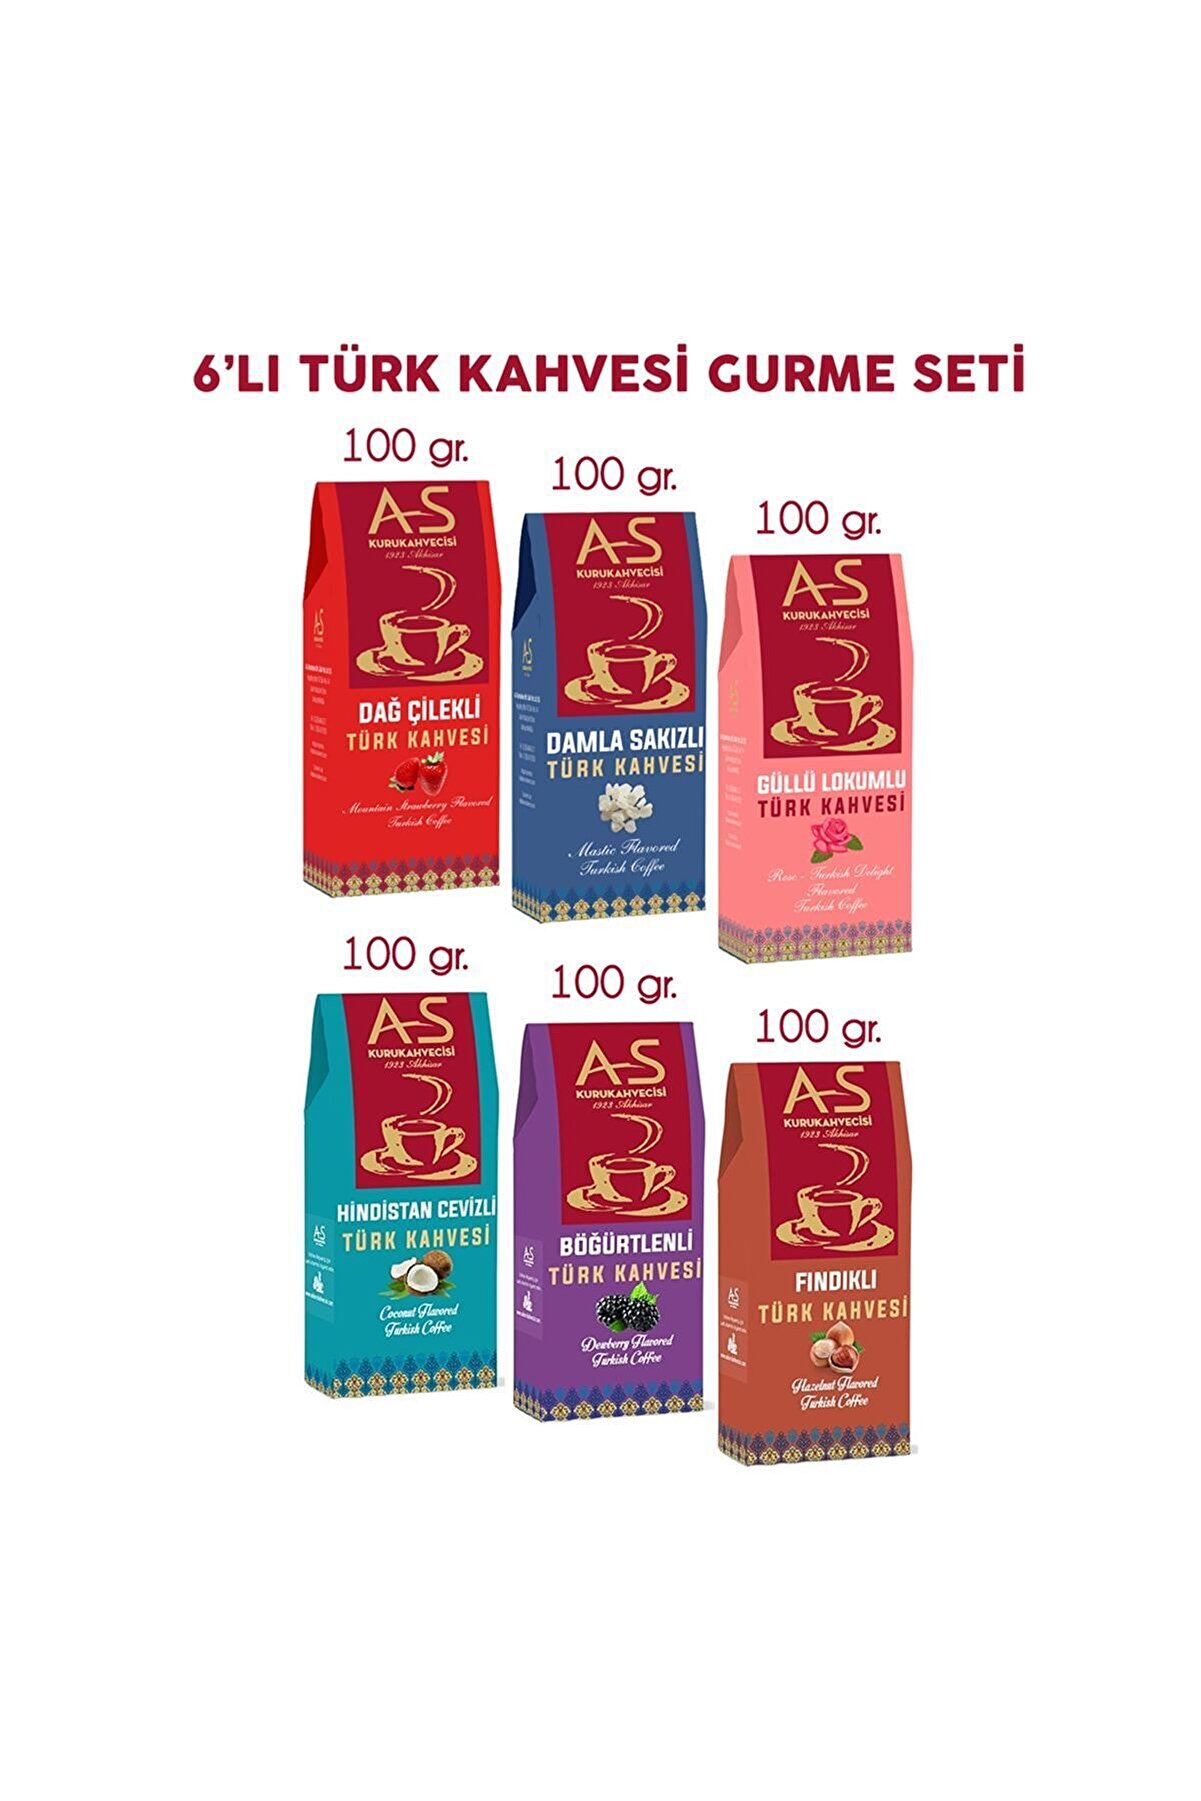 AS Kurukahvecisi 6'lı Türk Kahvesi Gurme Seti